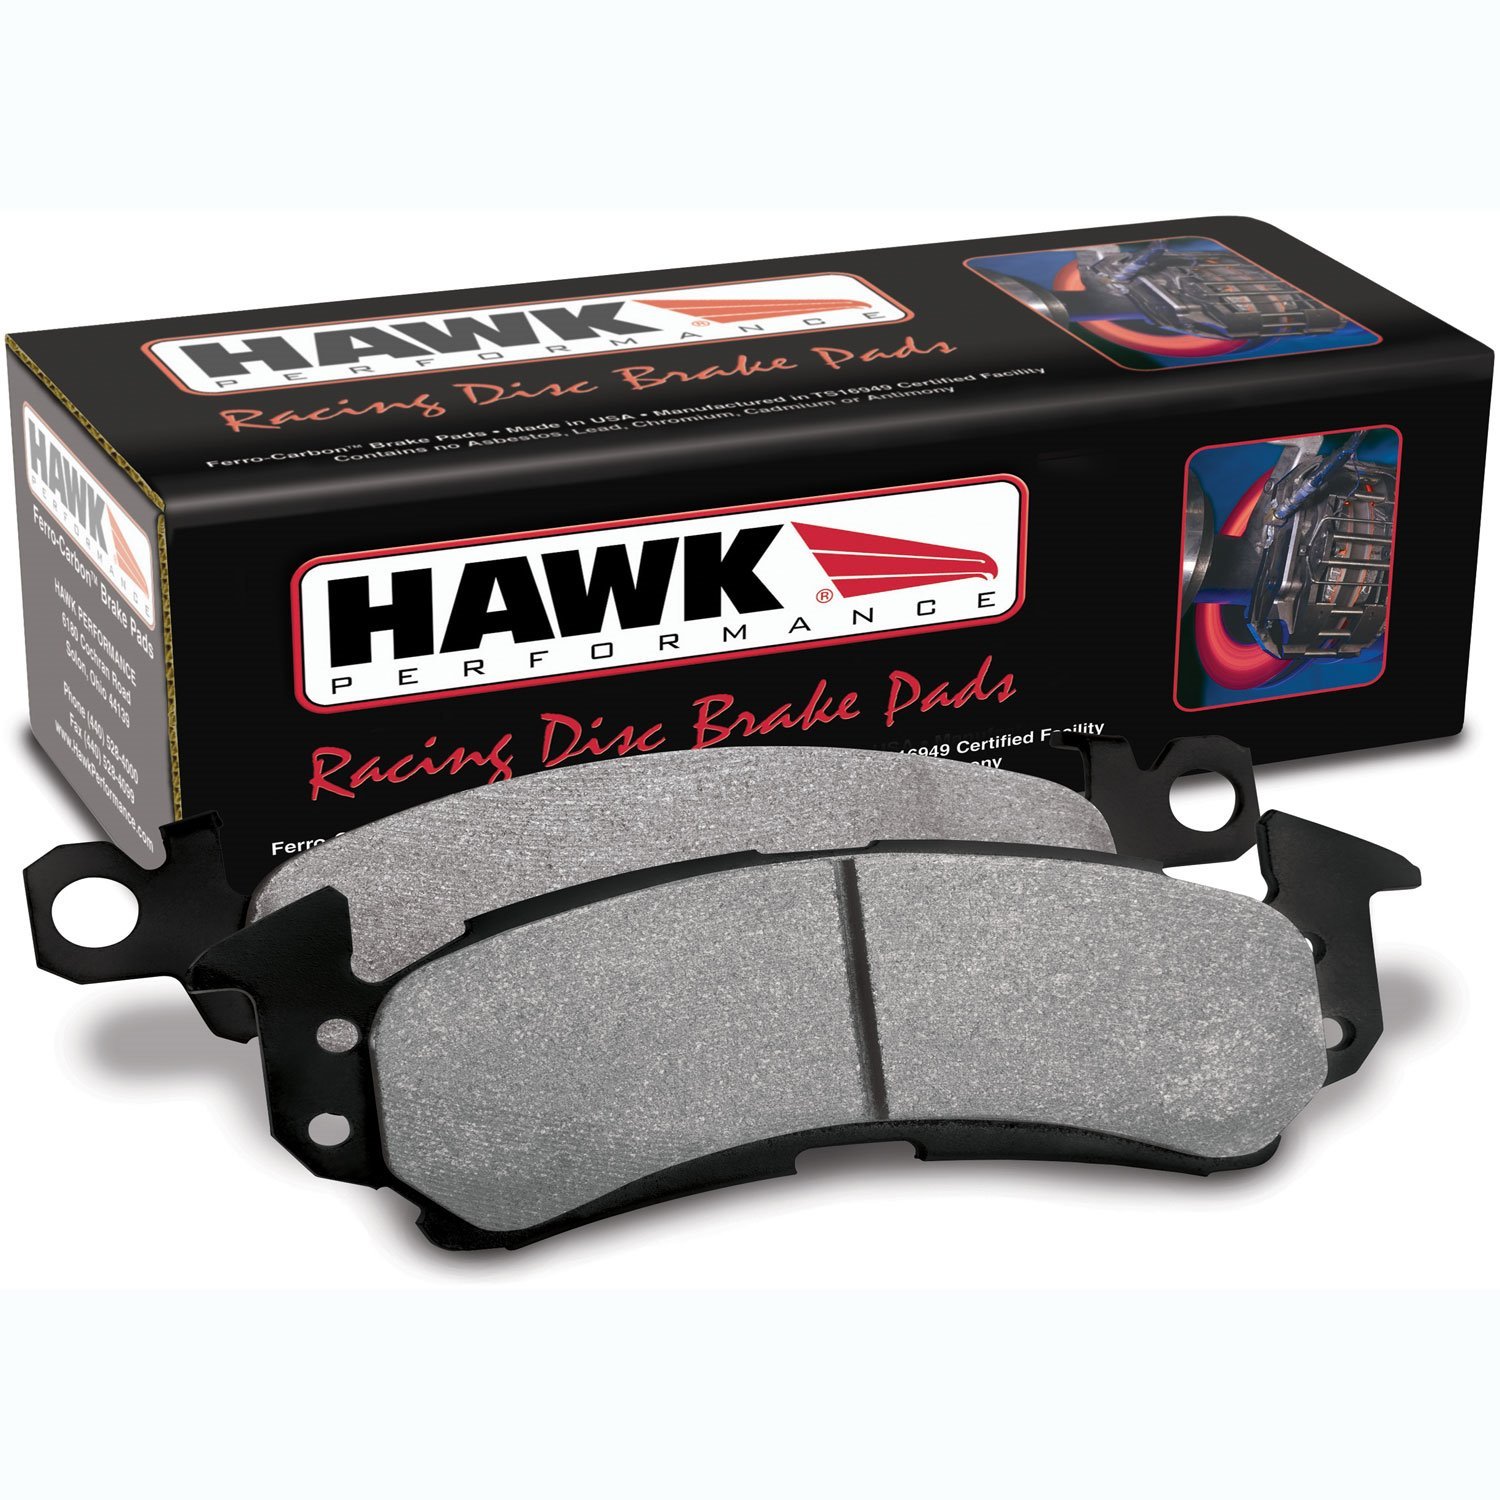 Disc Brake Pad HT-10 w/0.598 Thickness